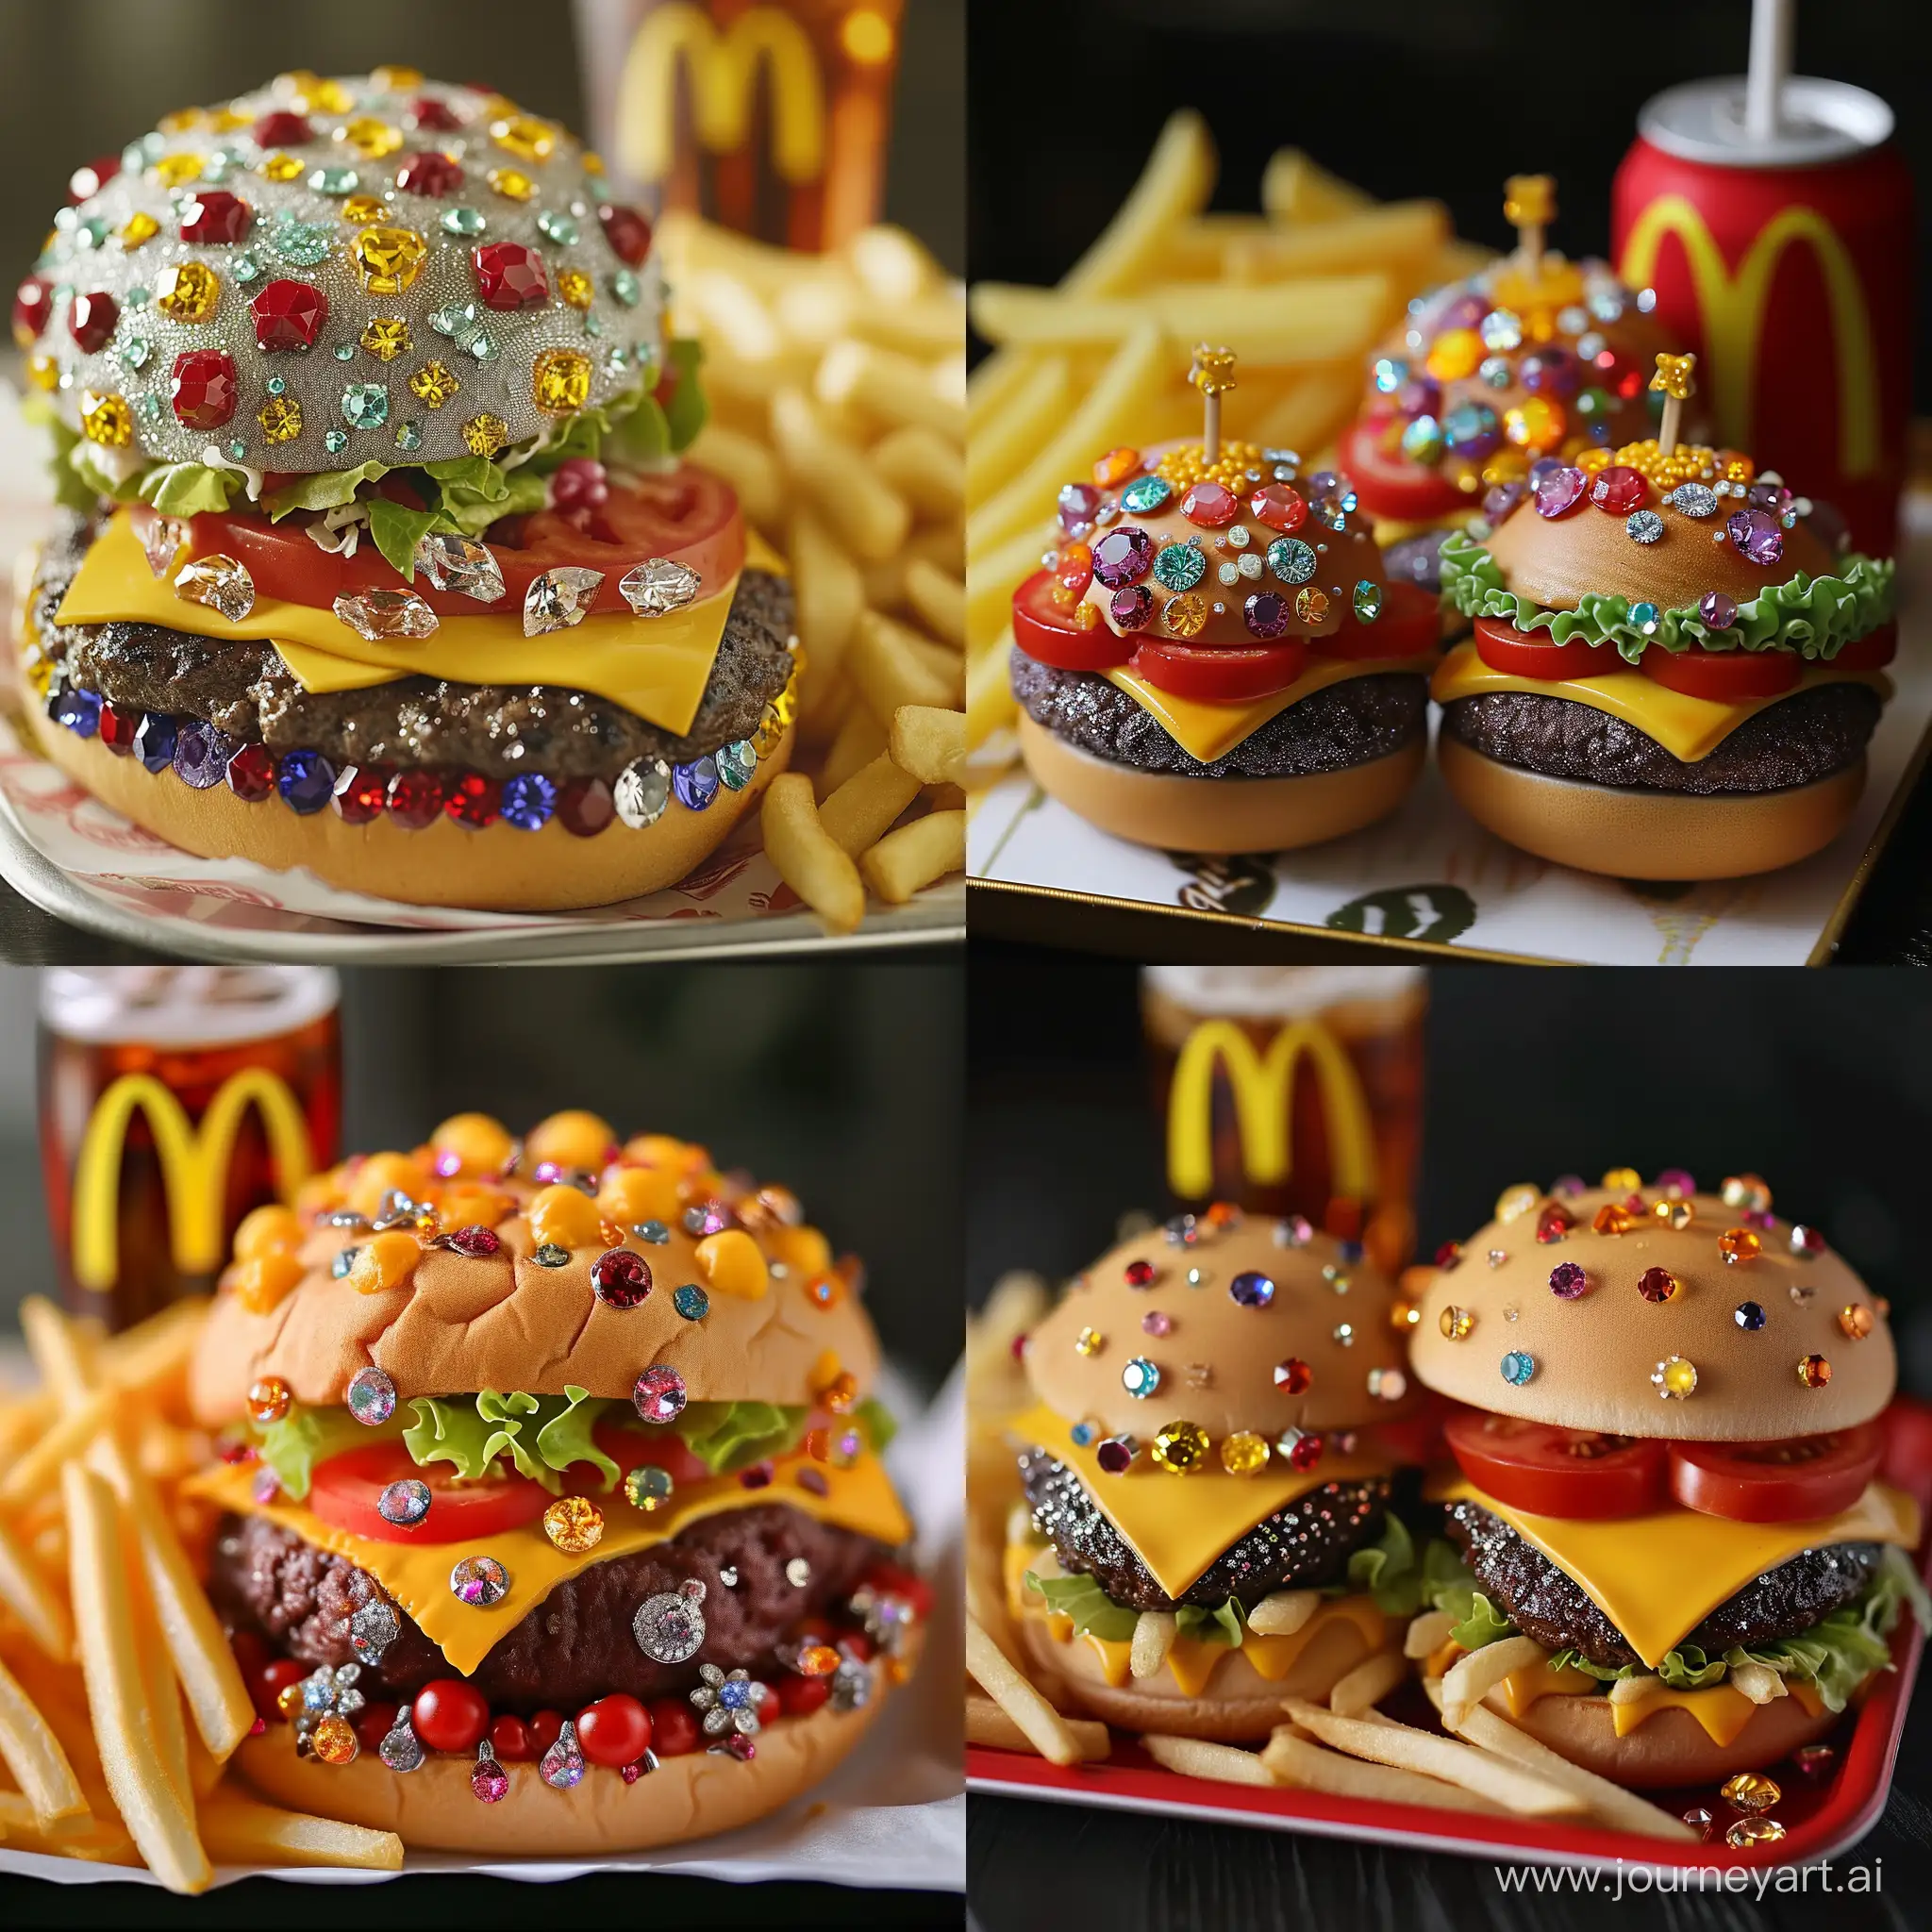 JewelEncrusted-Cheeseburger-Delight-at-McDonalds